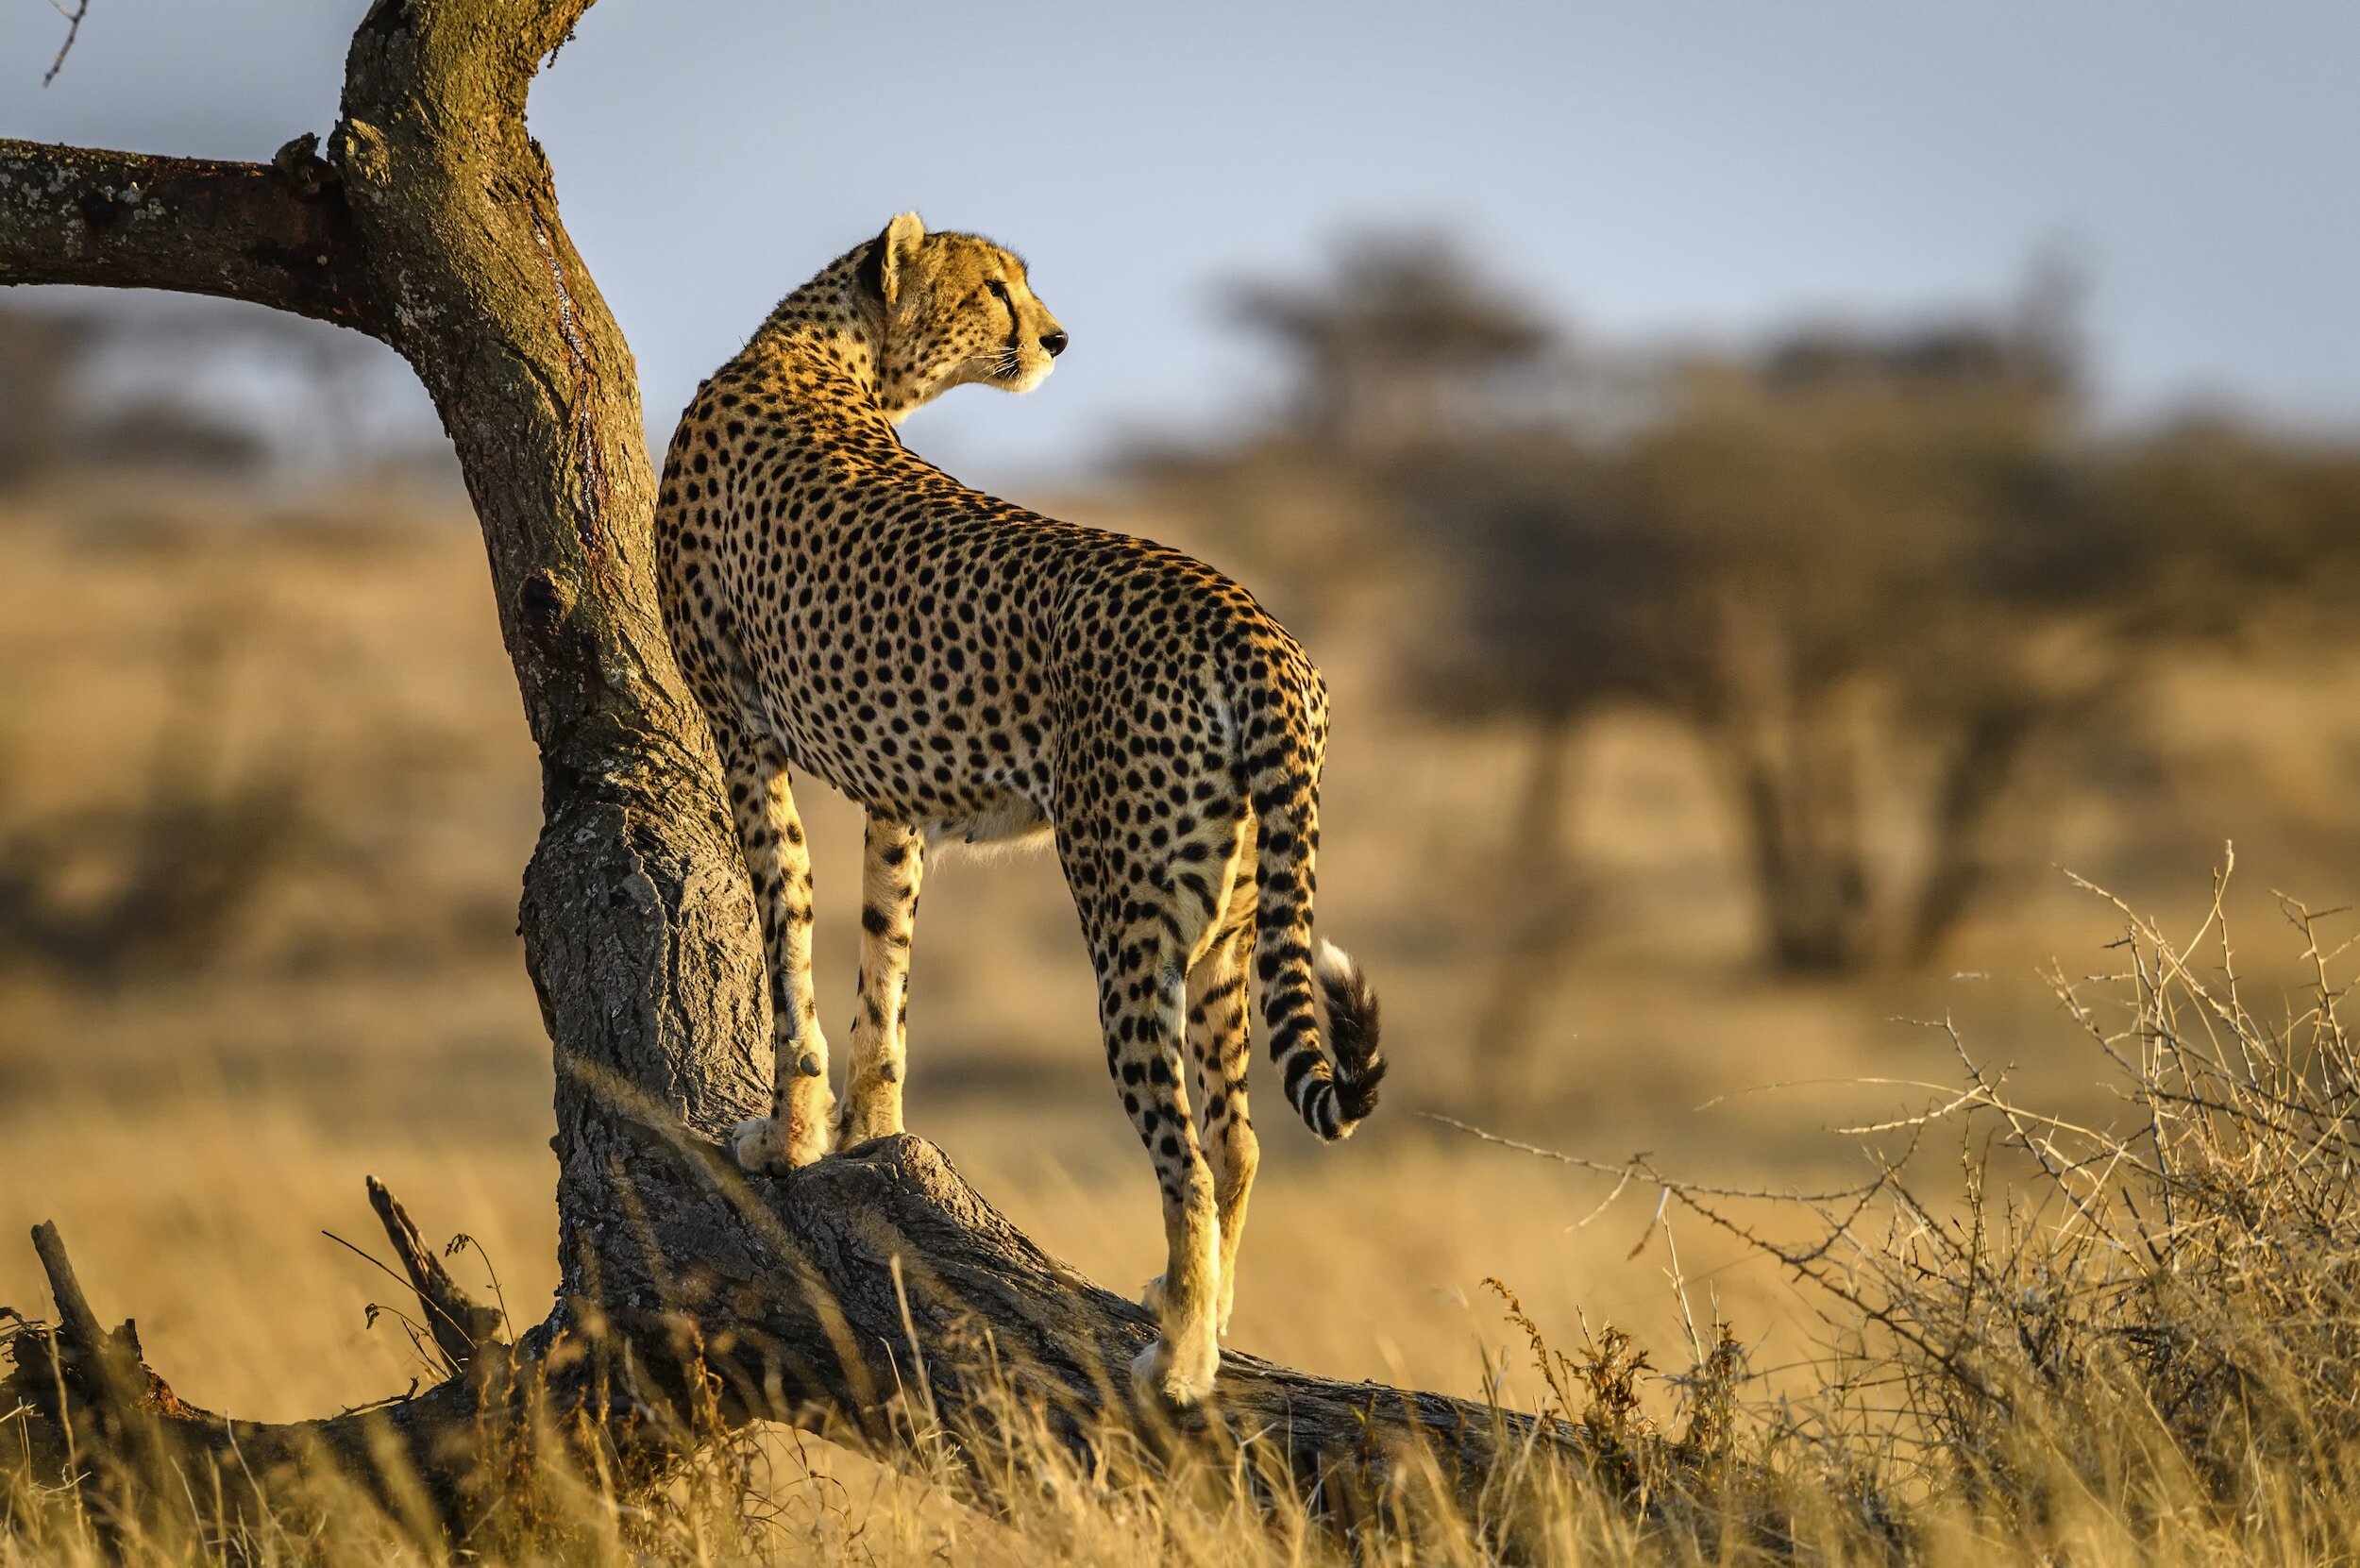 Conserving Tanzania: A luxury venture into the Serengeti